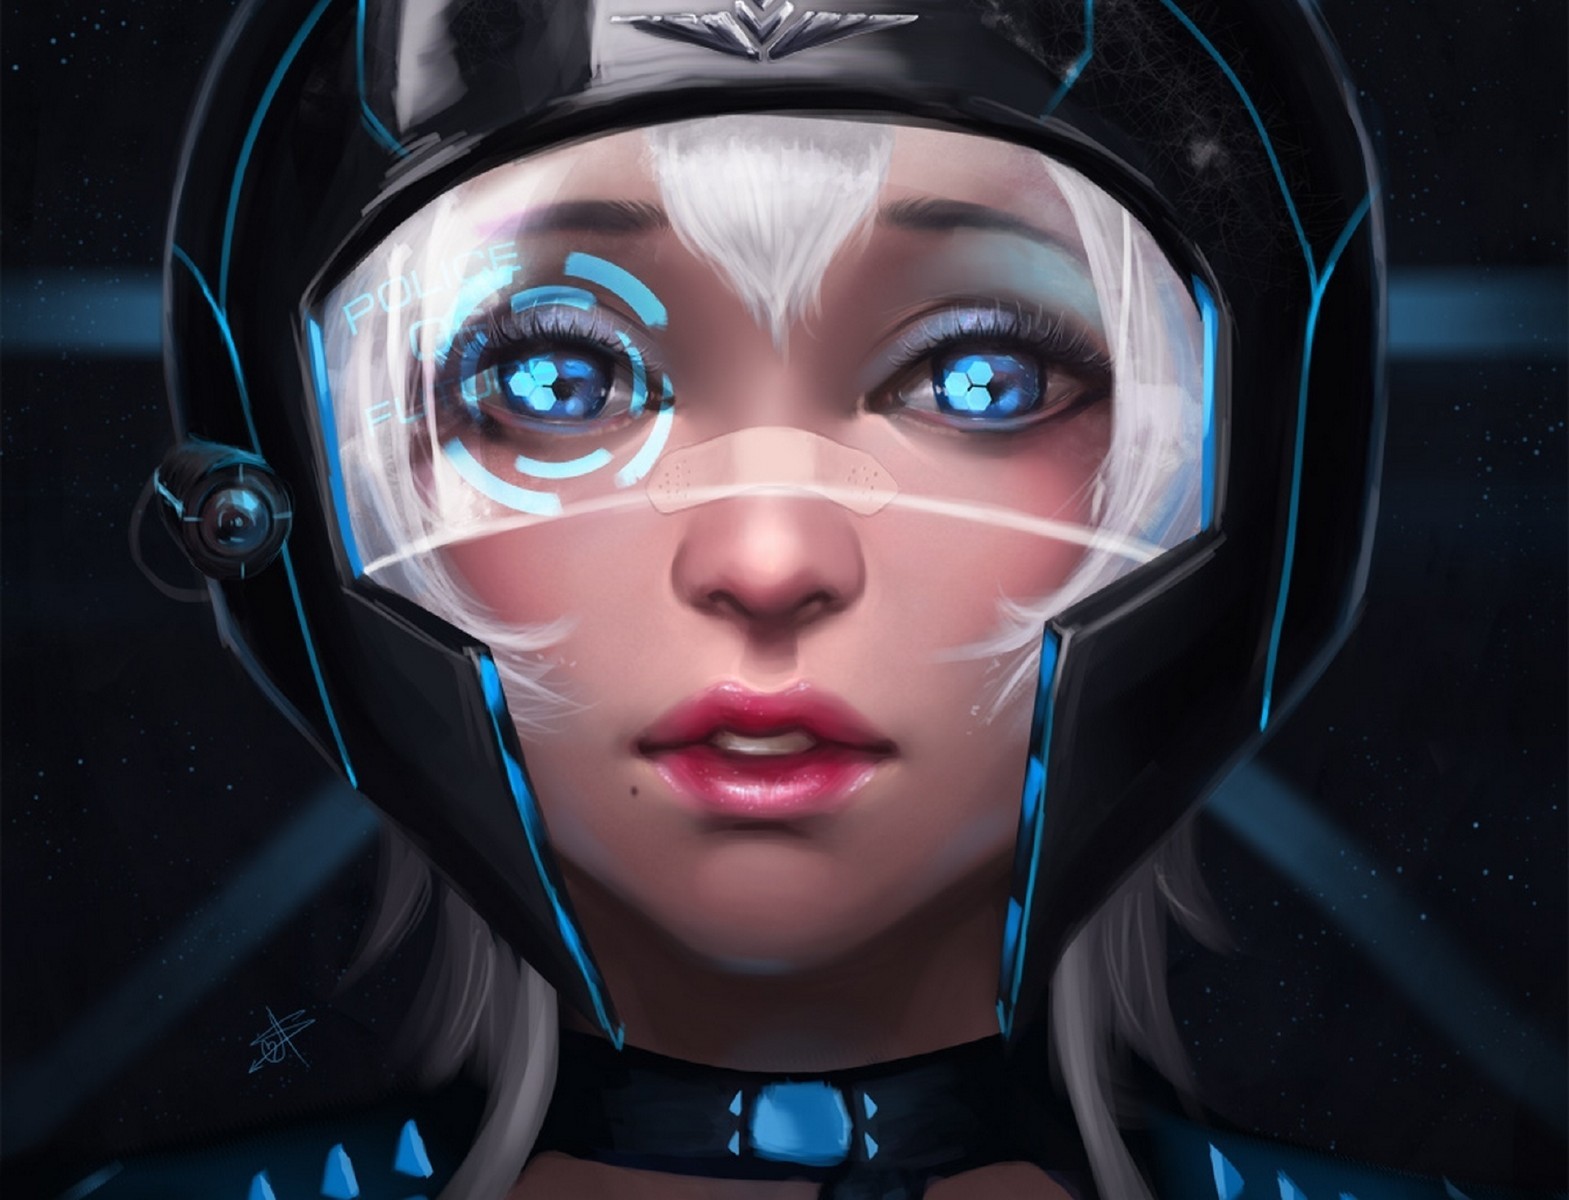 Anime 1569x1200 anime girls anime blue eyes helmet futuristic face science fiction women women science fiction